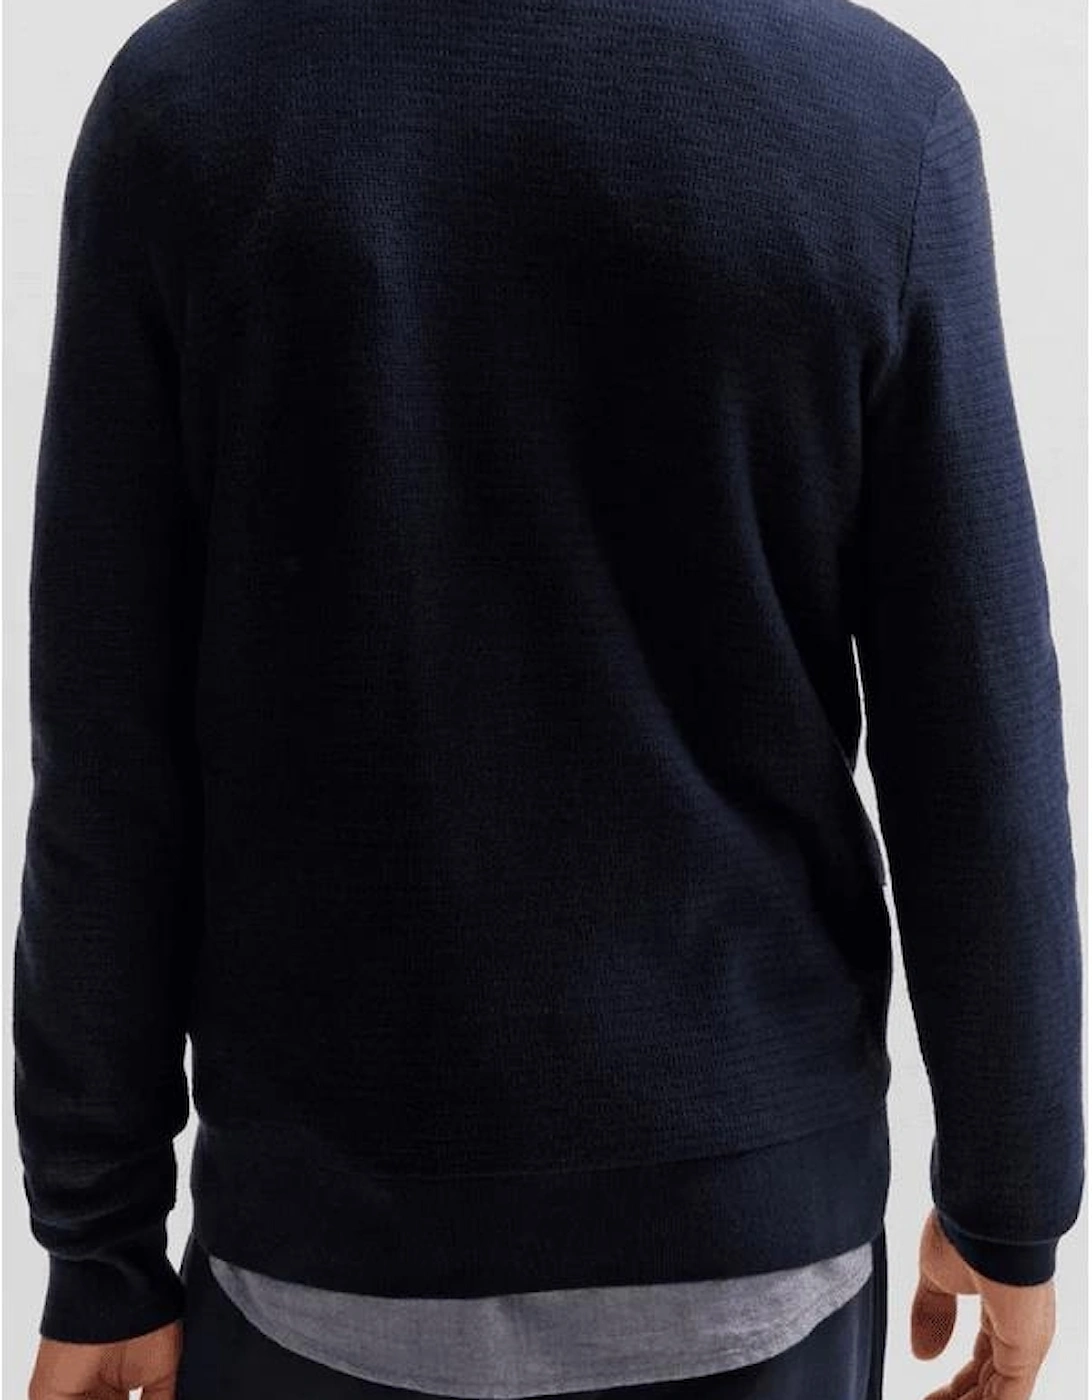 Anion Dark Blue Knitted Sweater